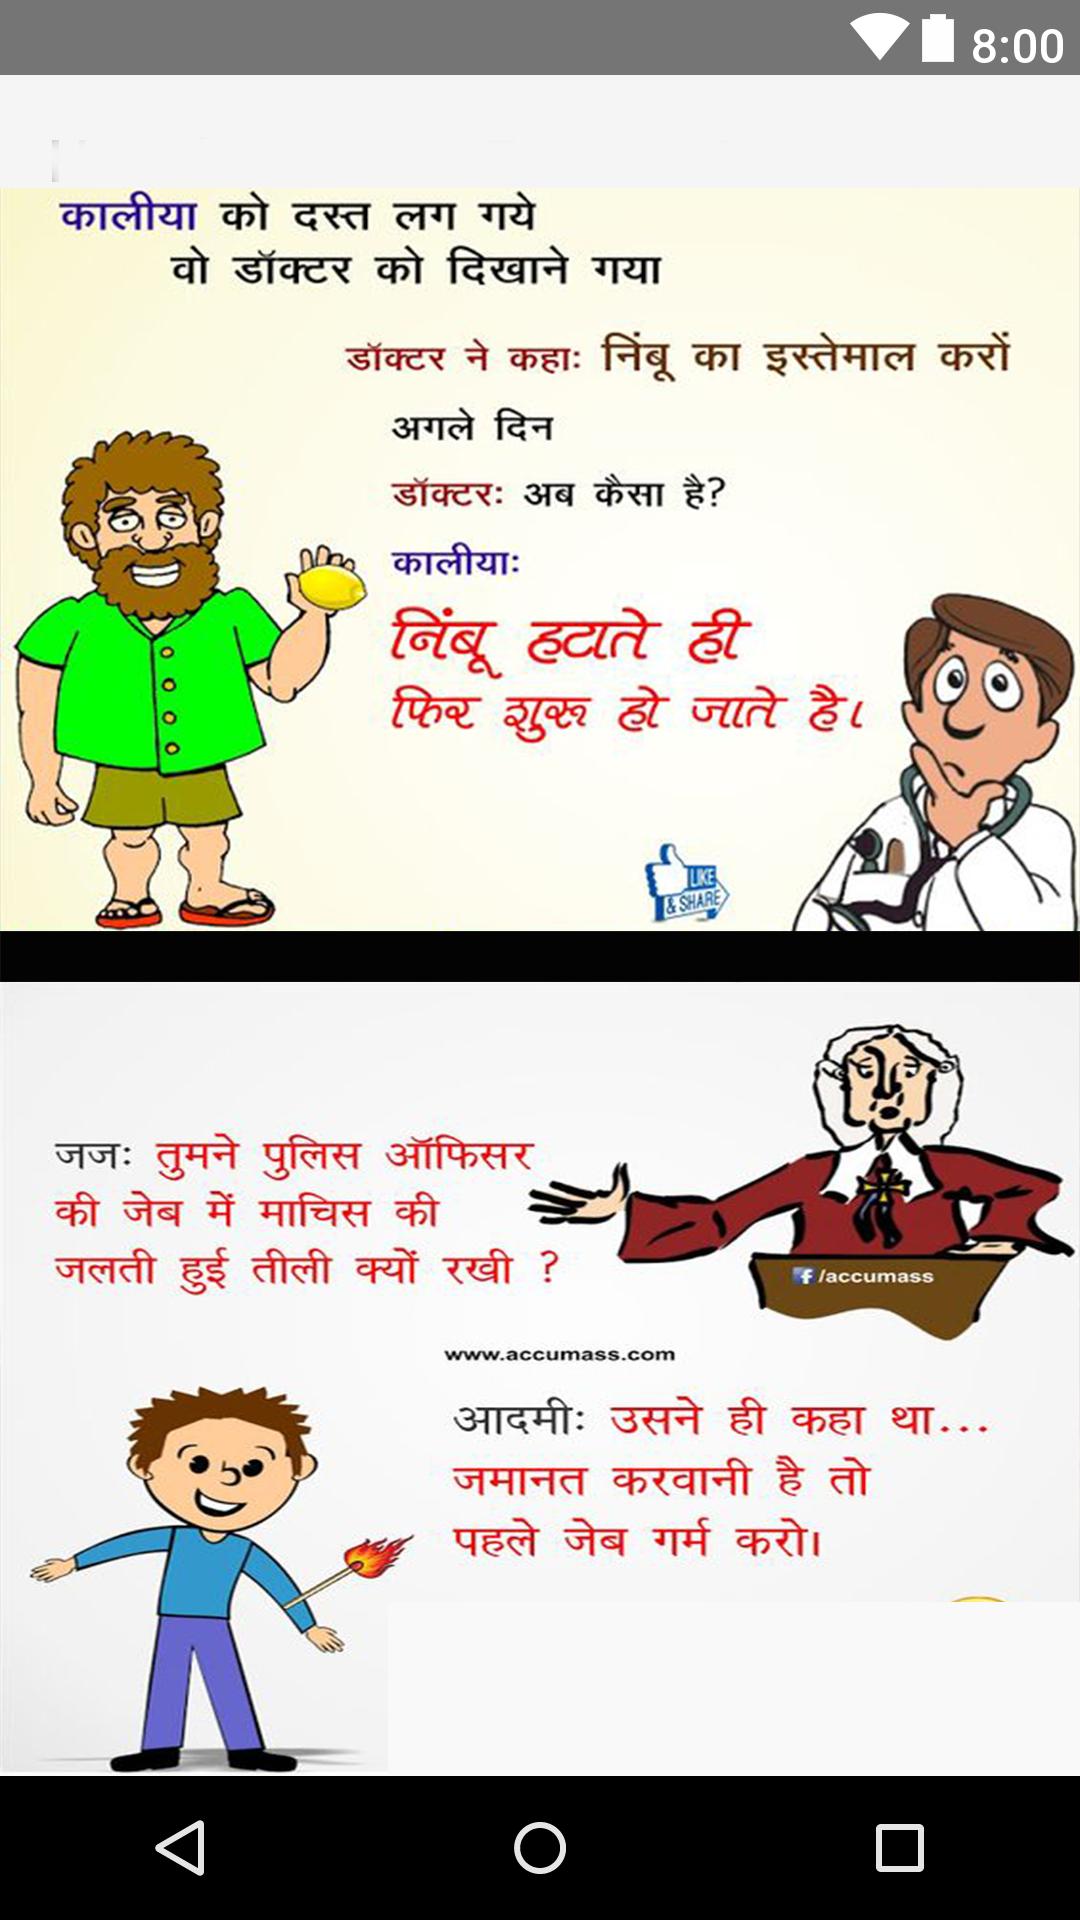 हिंदी चुटकुले - Hindi Funny jokes,Shayari Pictures APK for Android Download